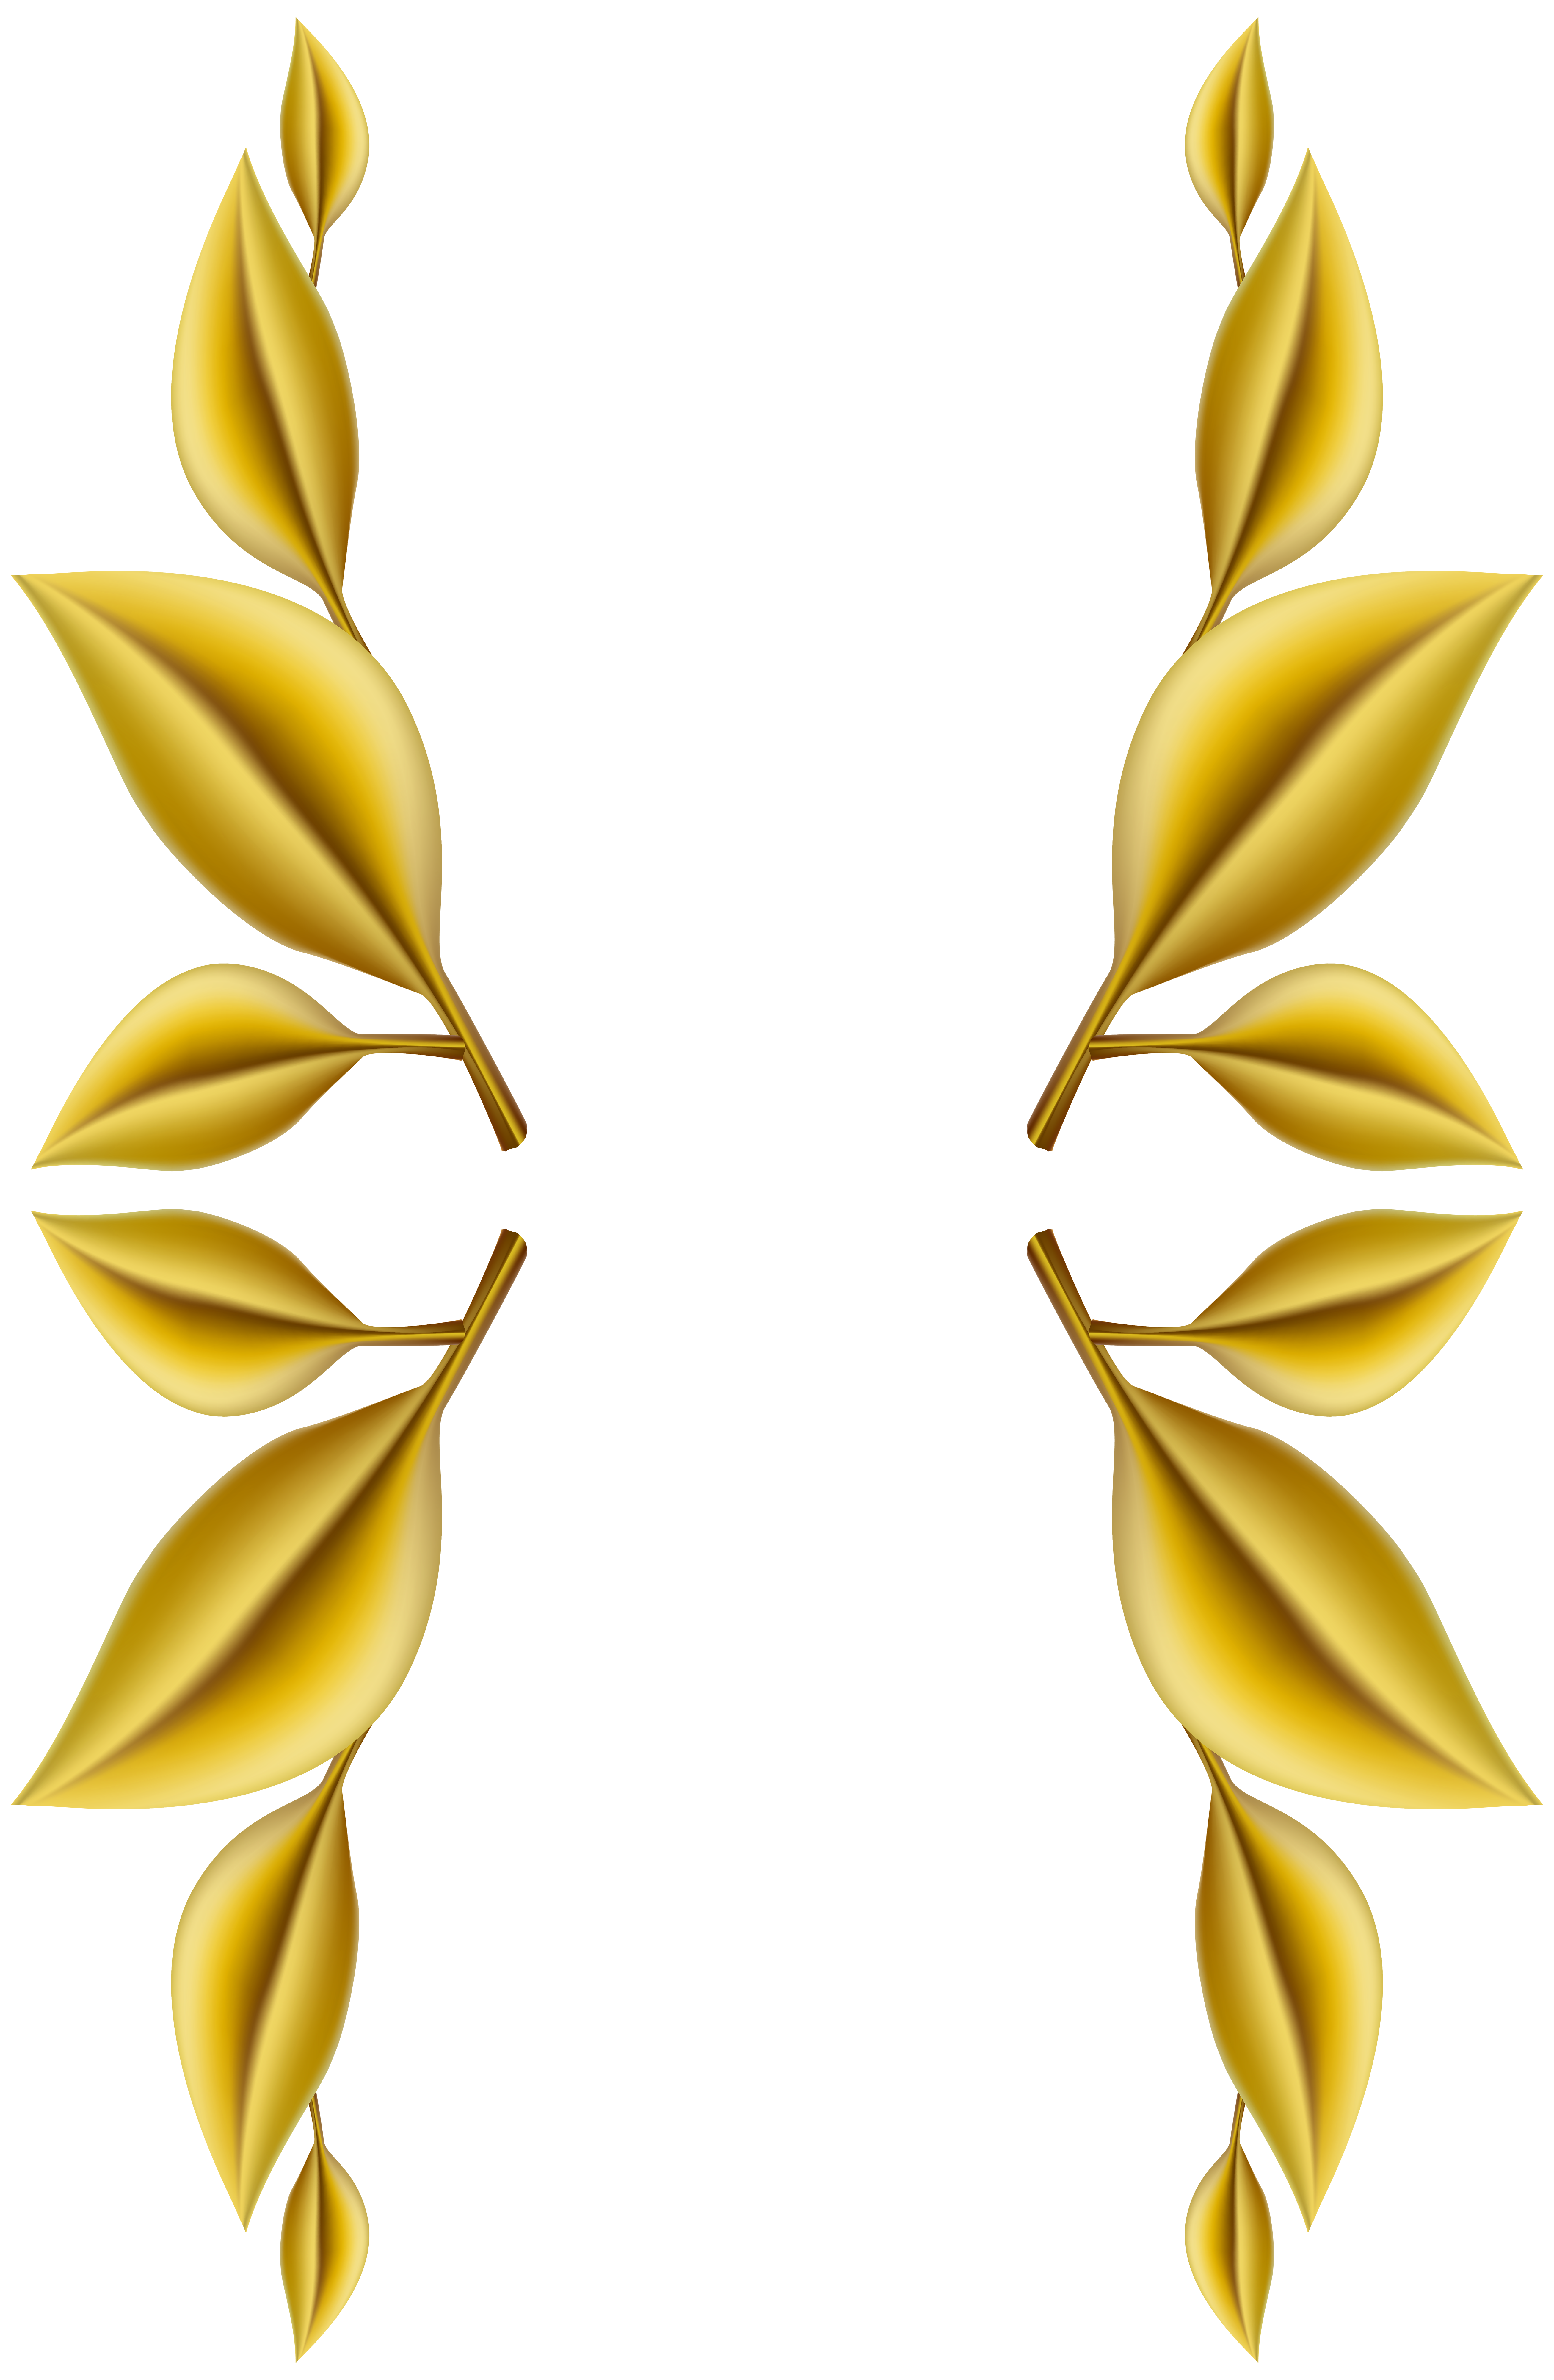 Gold Leaves Decoration PNG Clip Art Image.